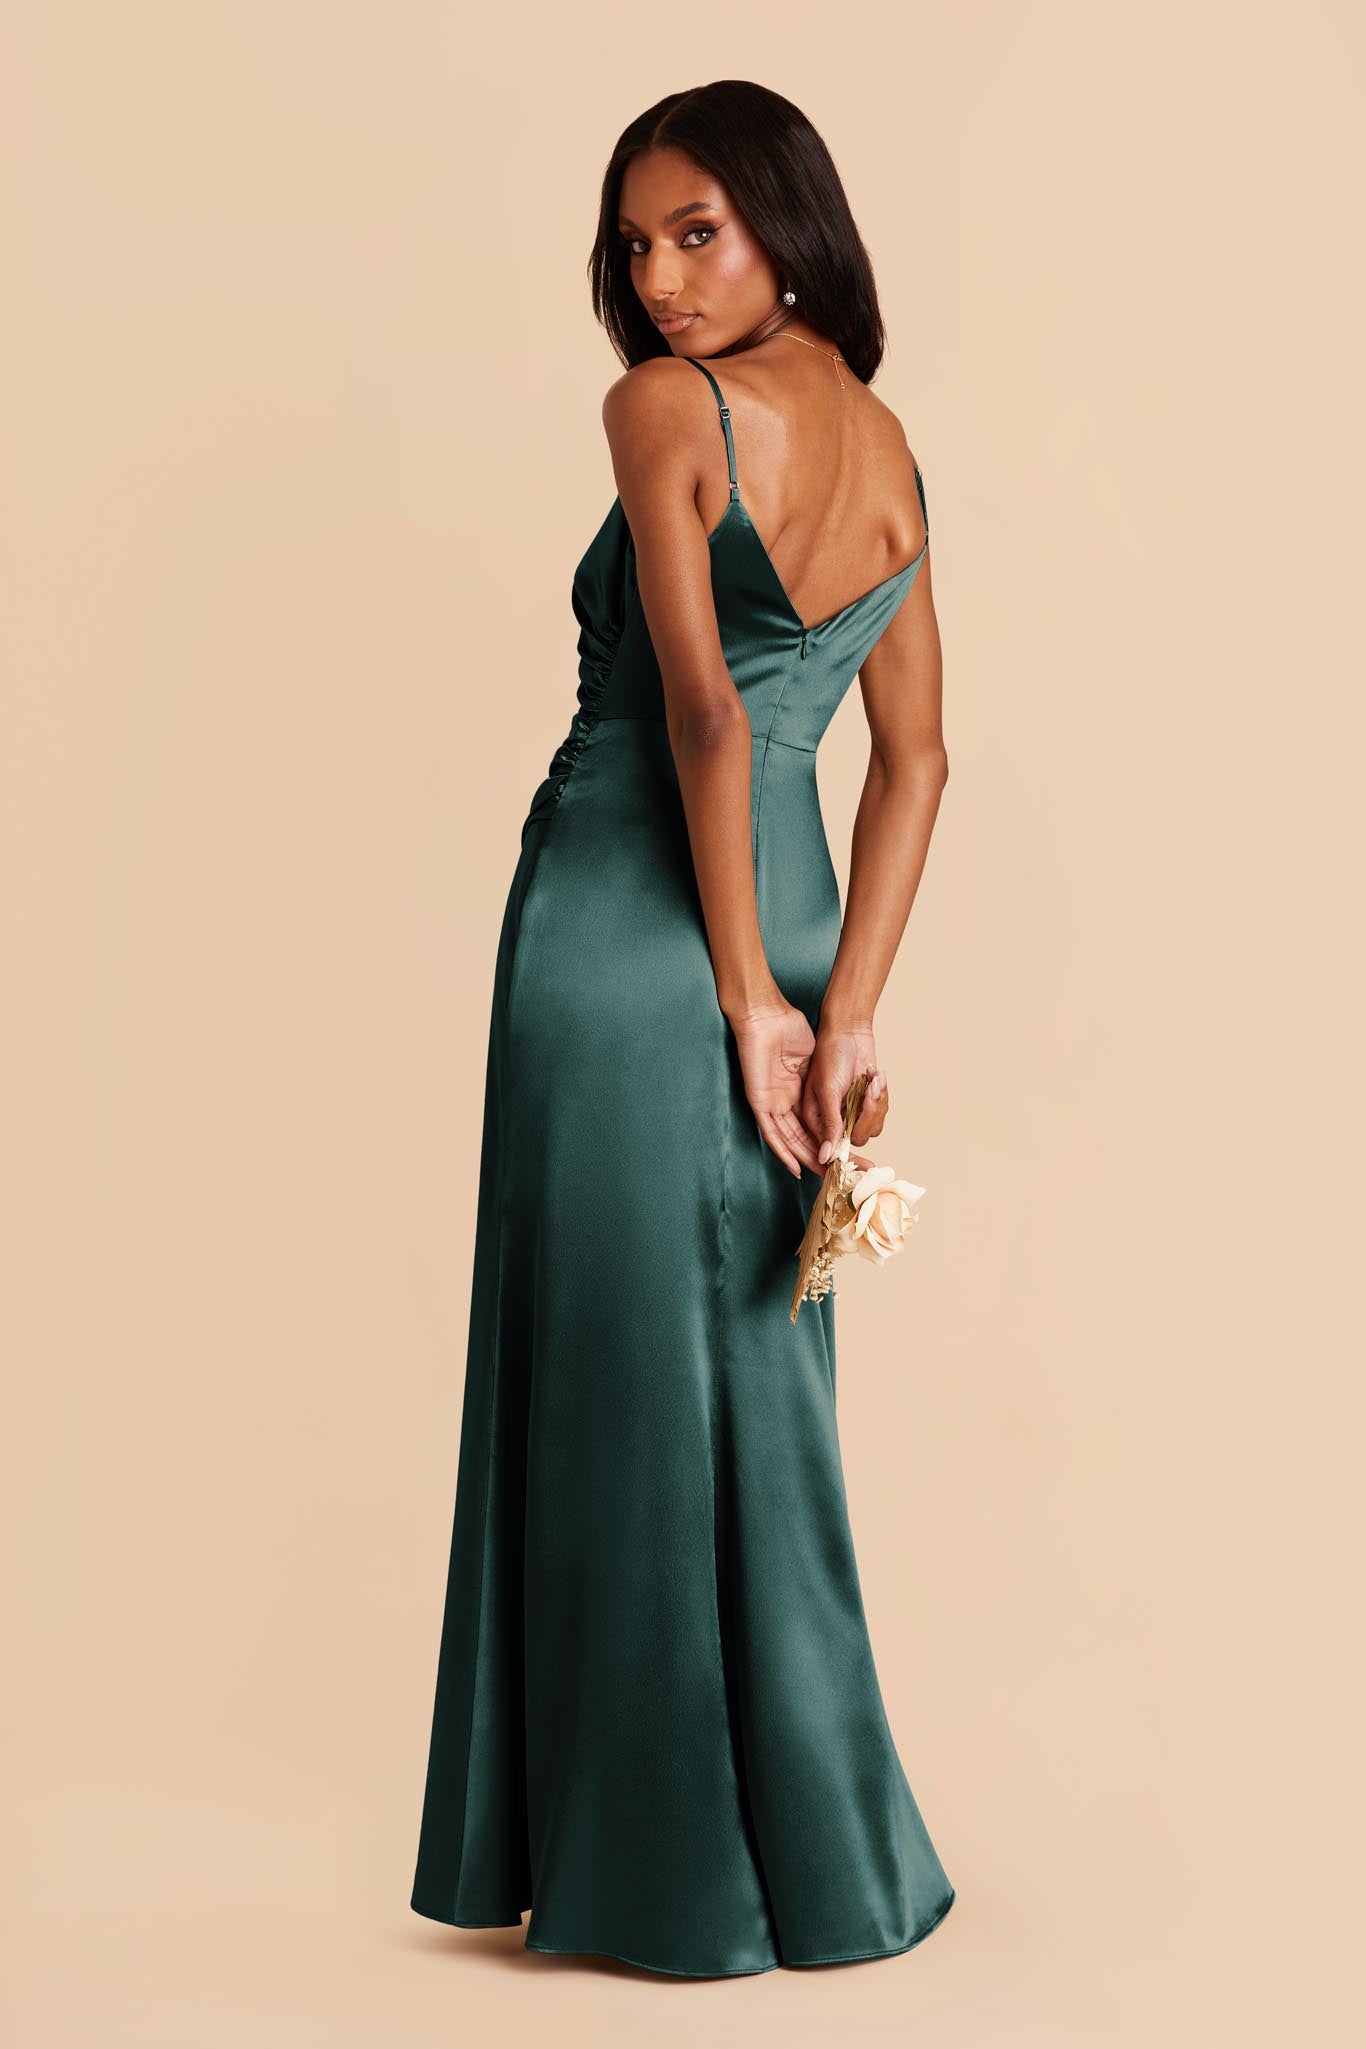 Catherine Shiny Satin Dress - Emerald